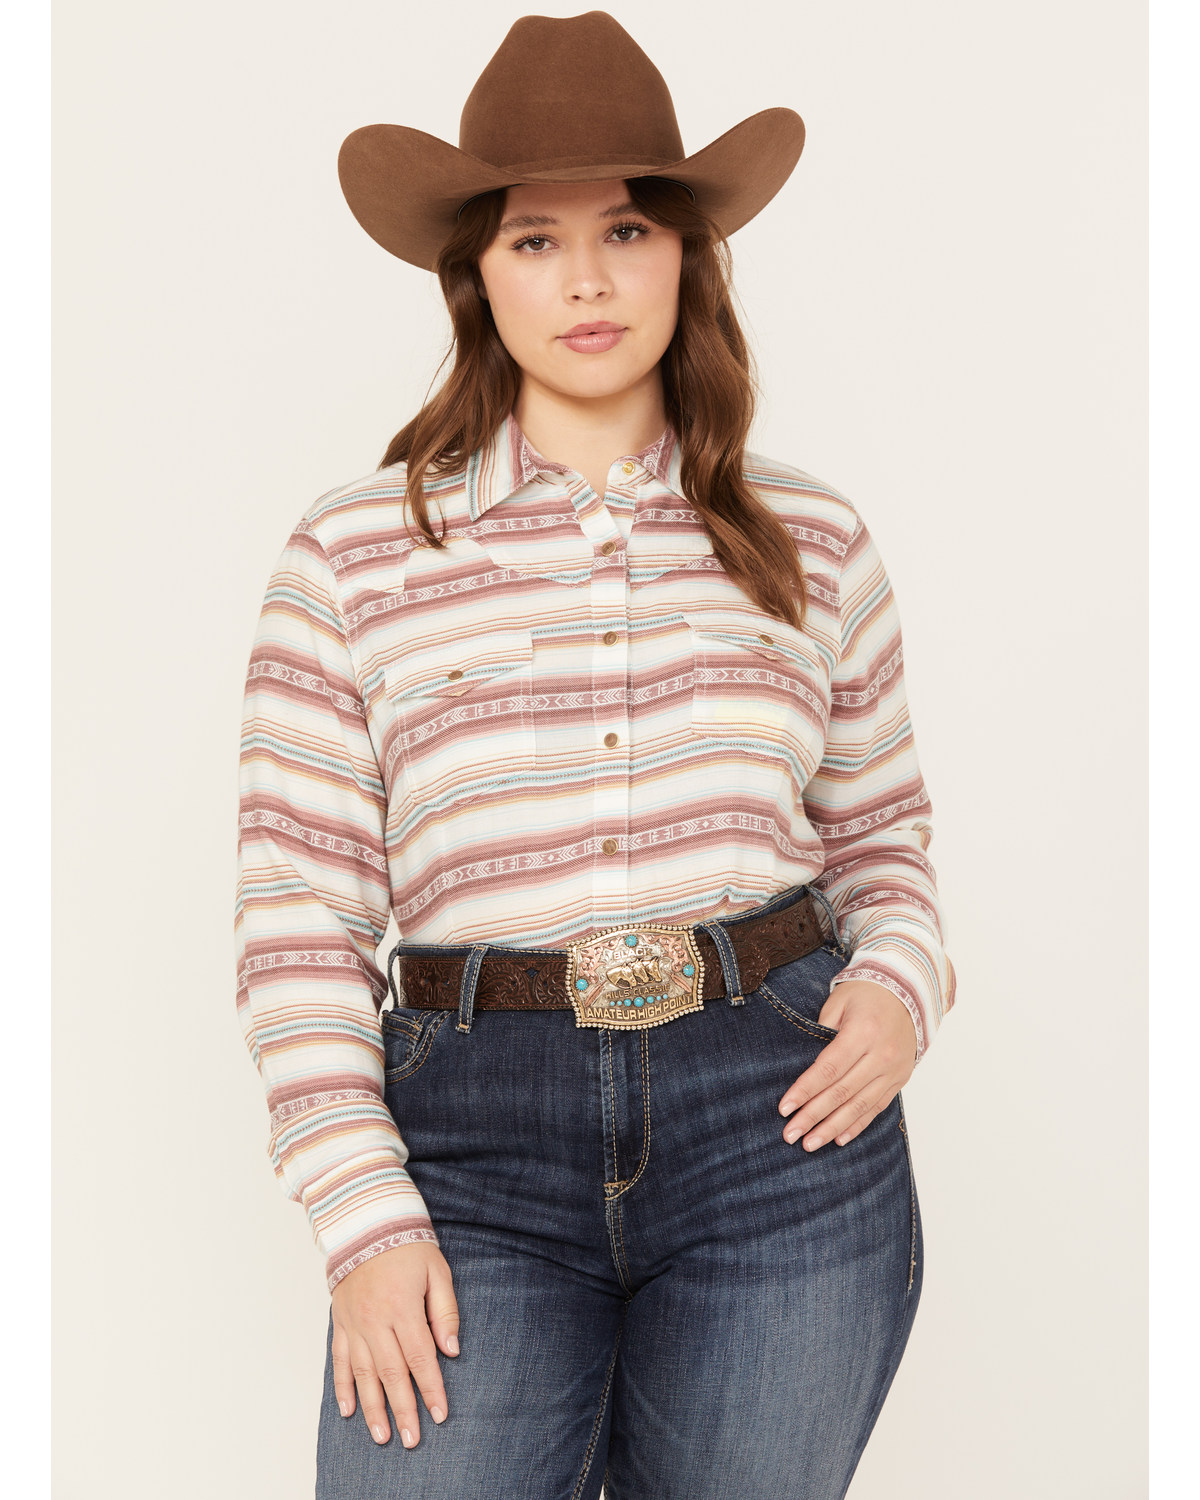 Ariat Women's R.E.A.L. Serape Jacquard Print Long Sleeve Snap Western Shirt